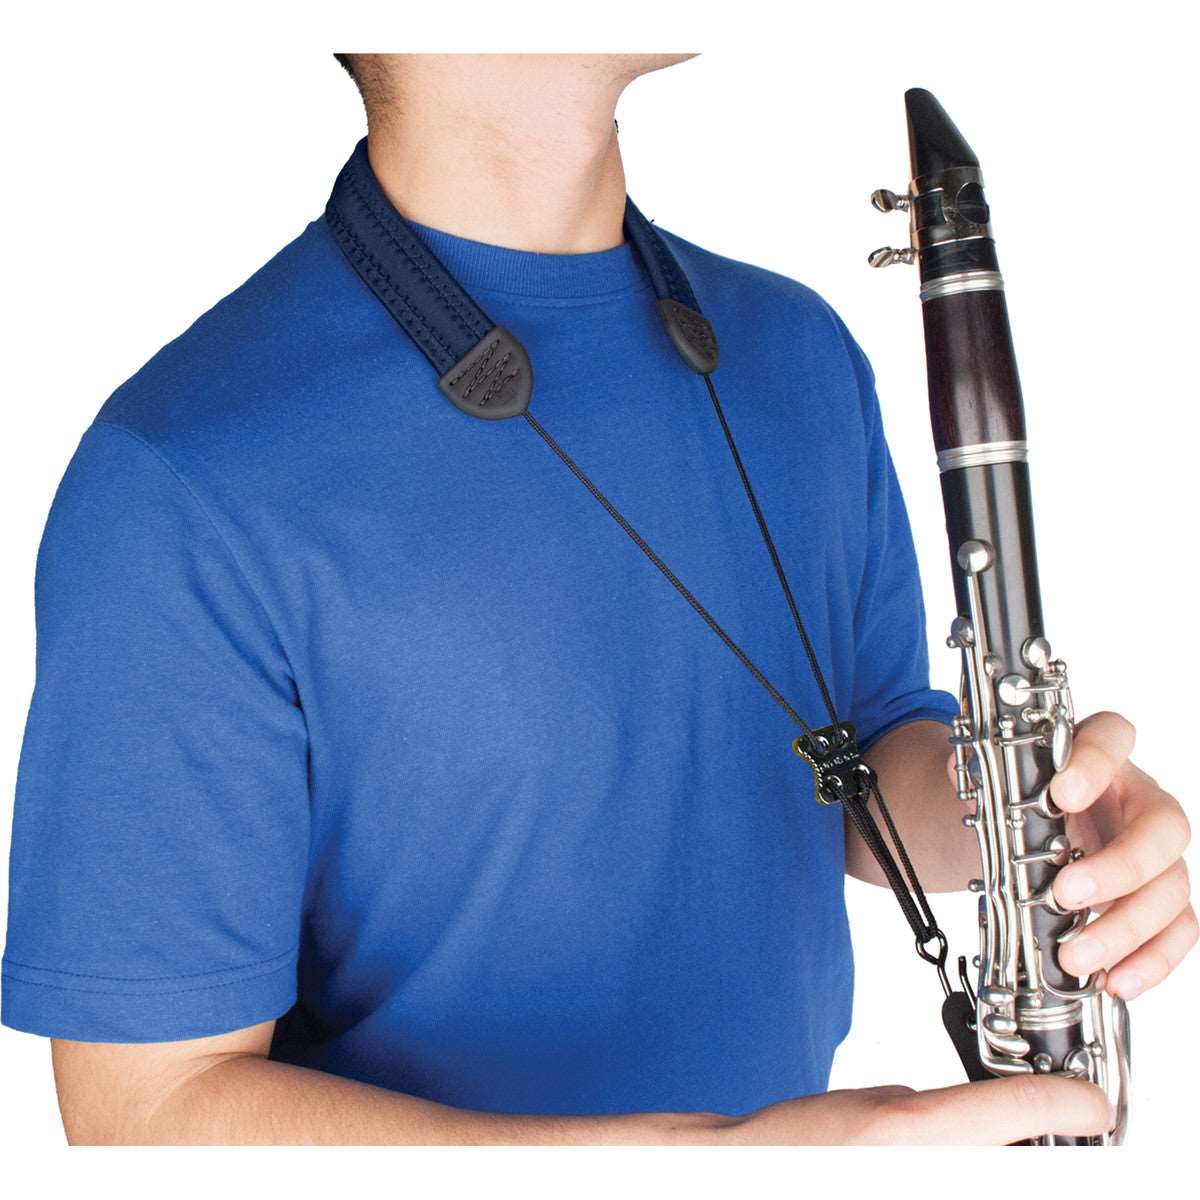 Protec Clarinet Neck Strap